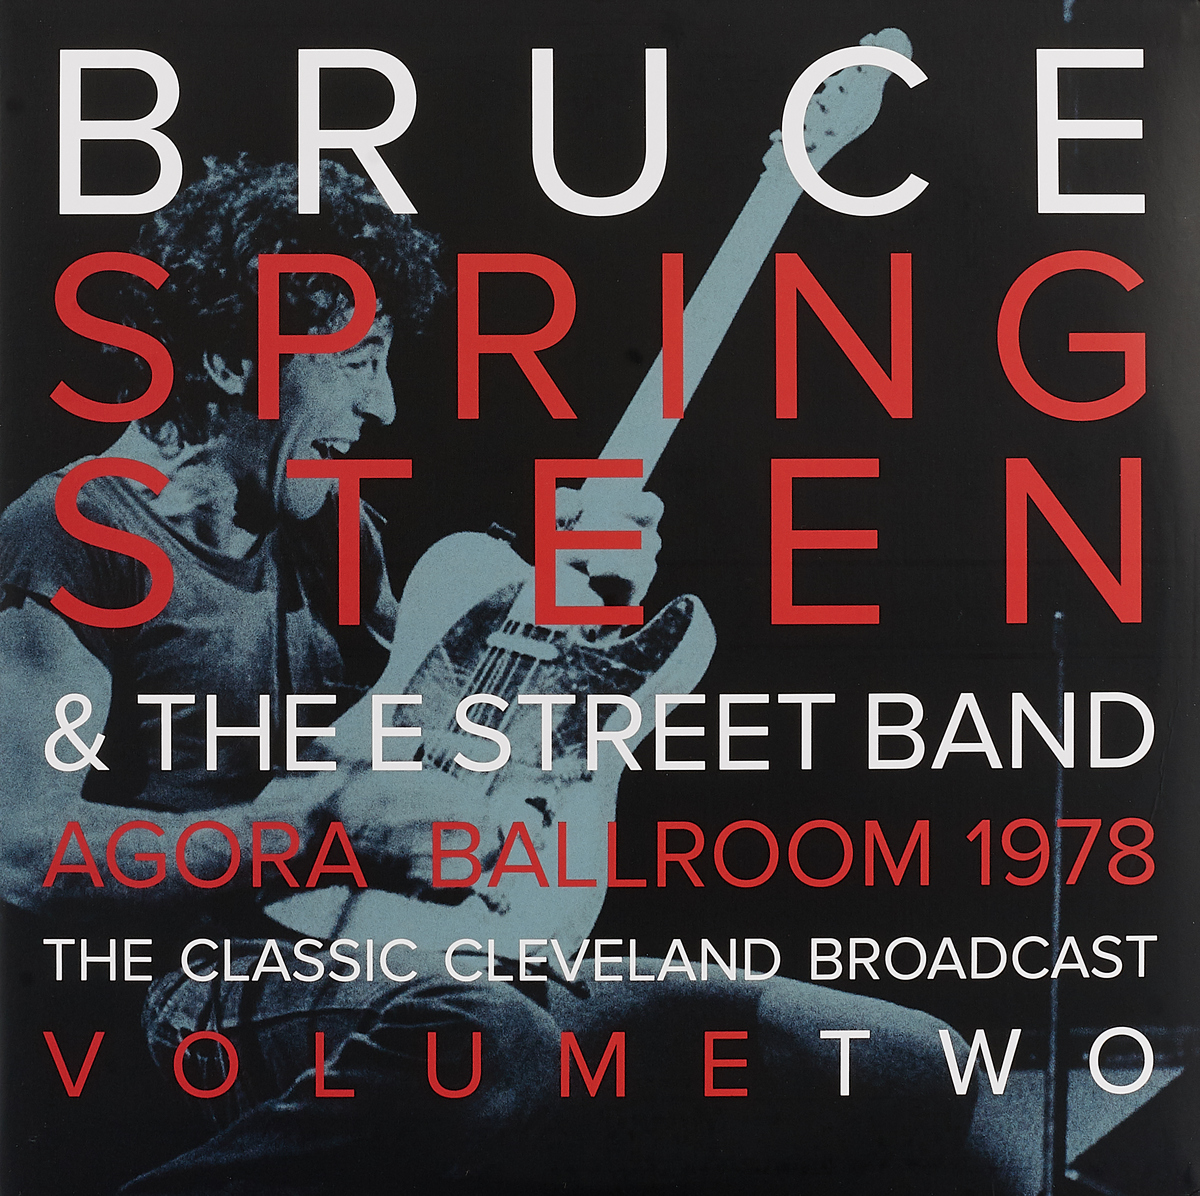 Брюс Спрингстин Bruce Springsteen & The E-Street Band. Agora Ballroom 1978 - The Classic Cleveland Broadcast Volume Two (2 LP)